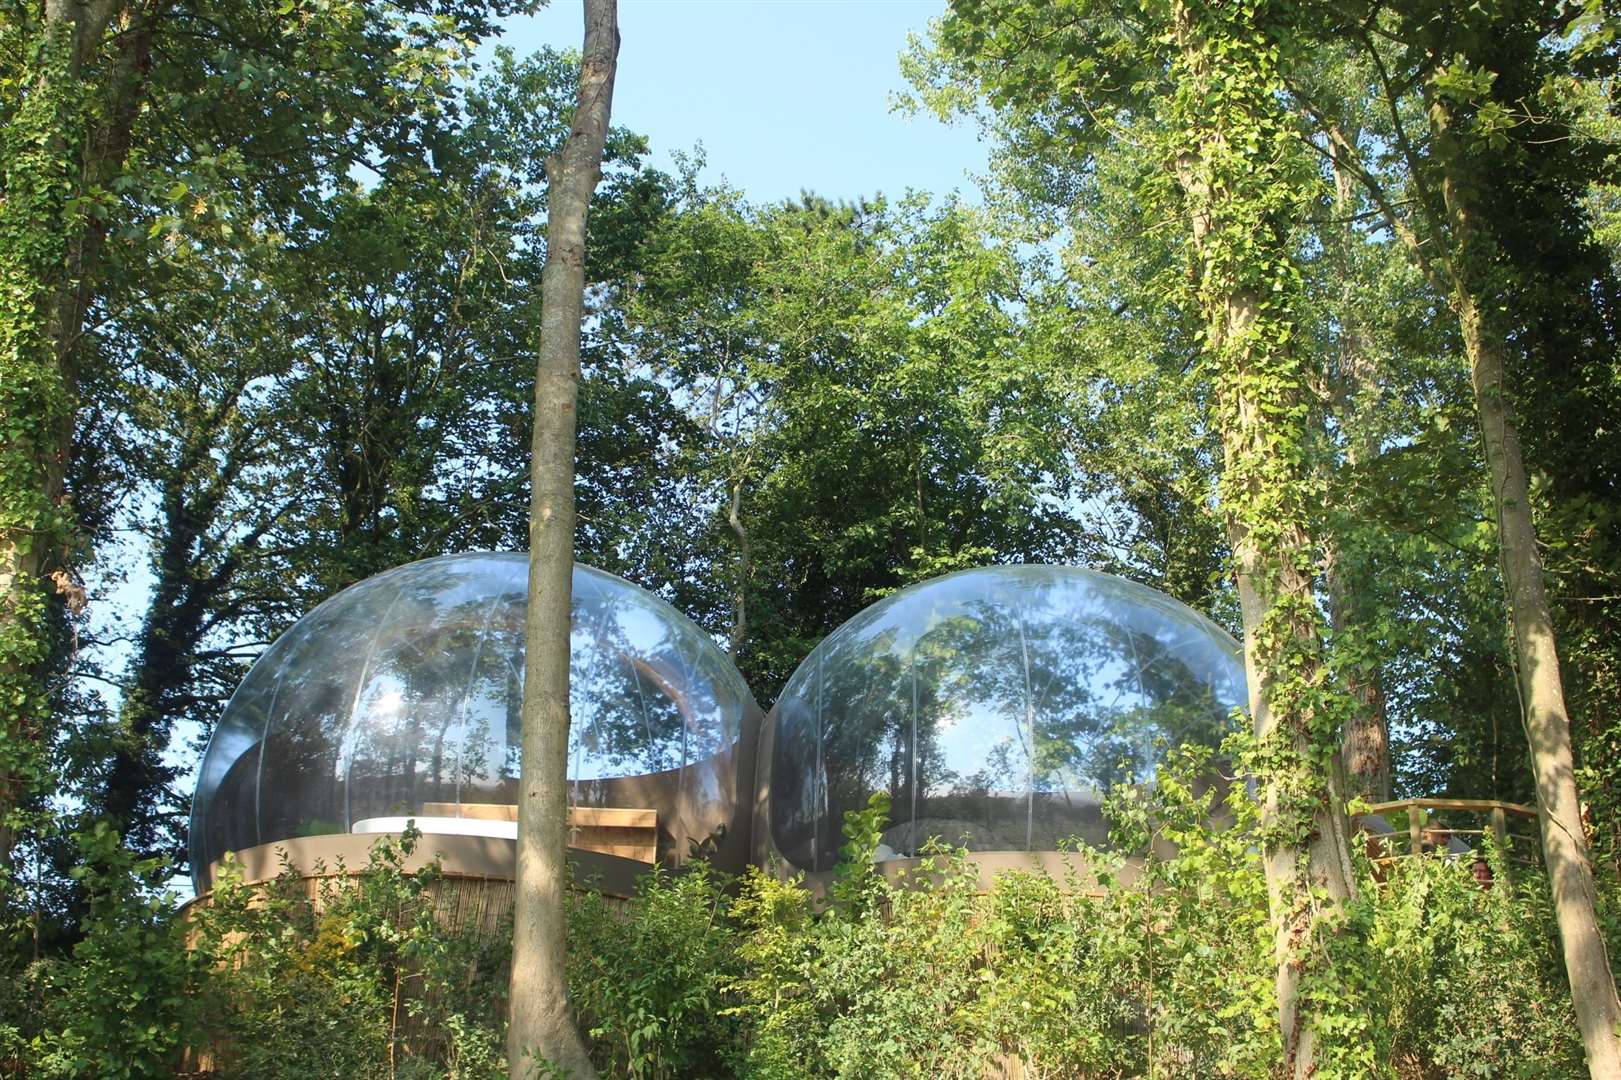 The Bubble retreat at Port Lympne